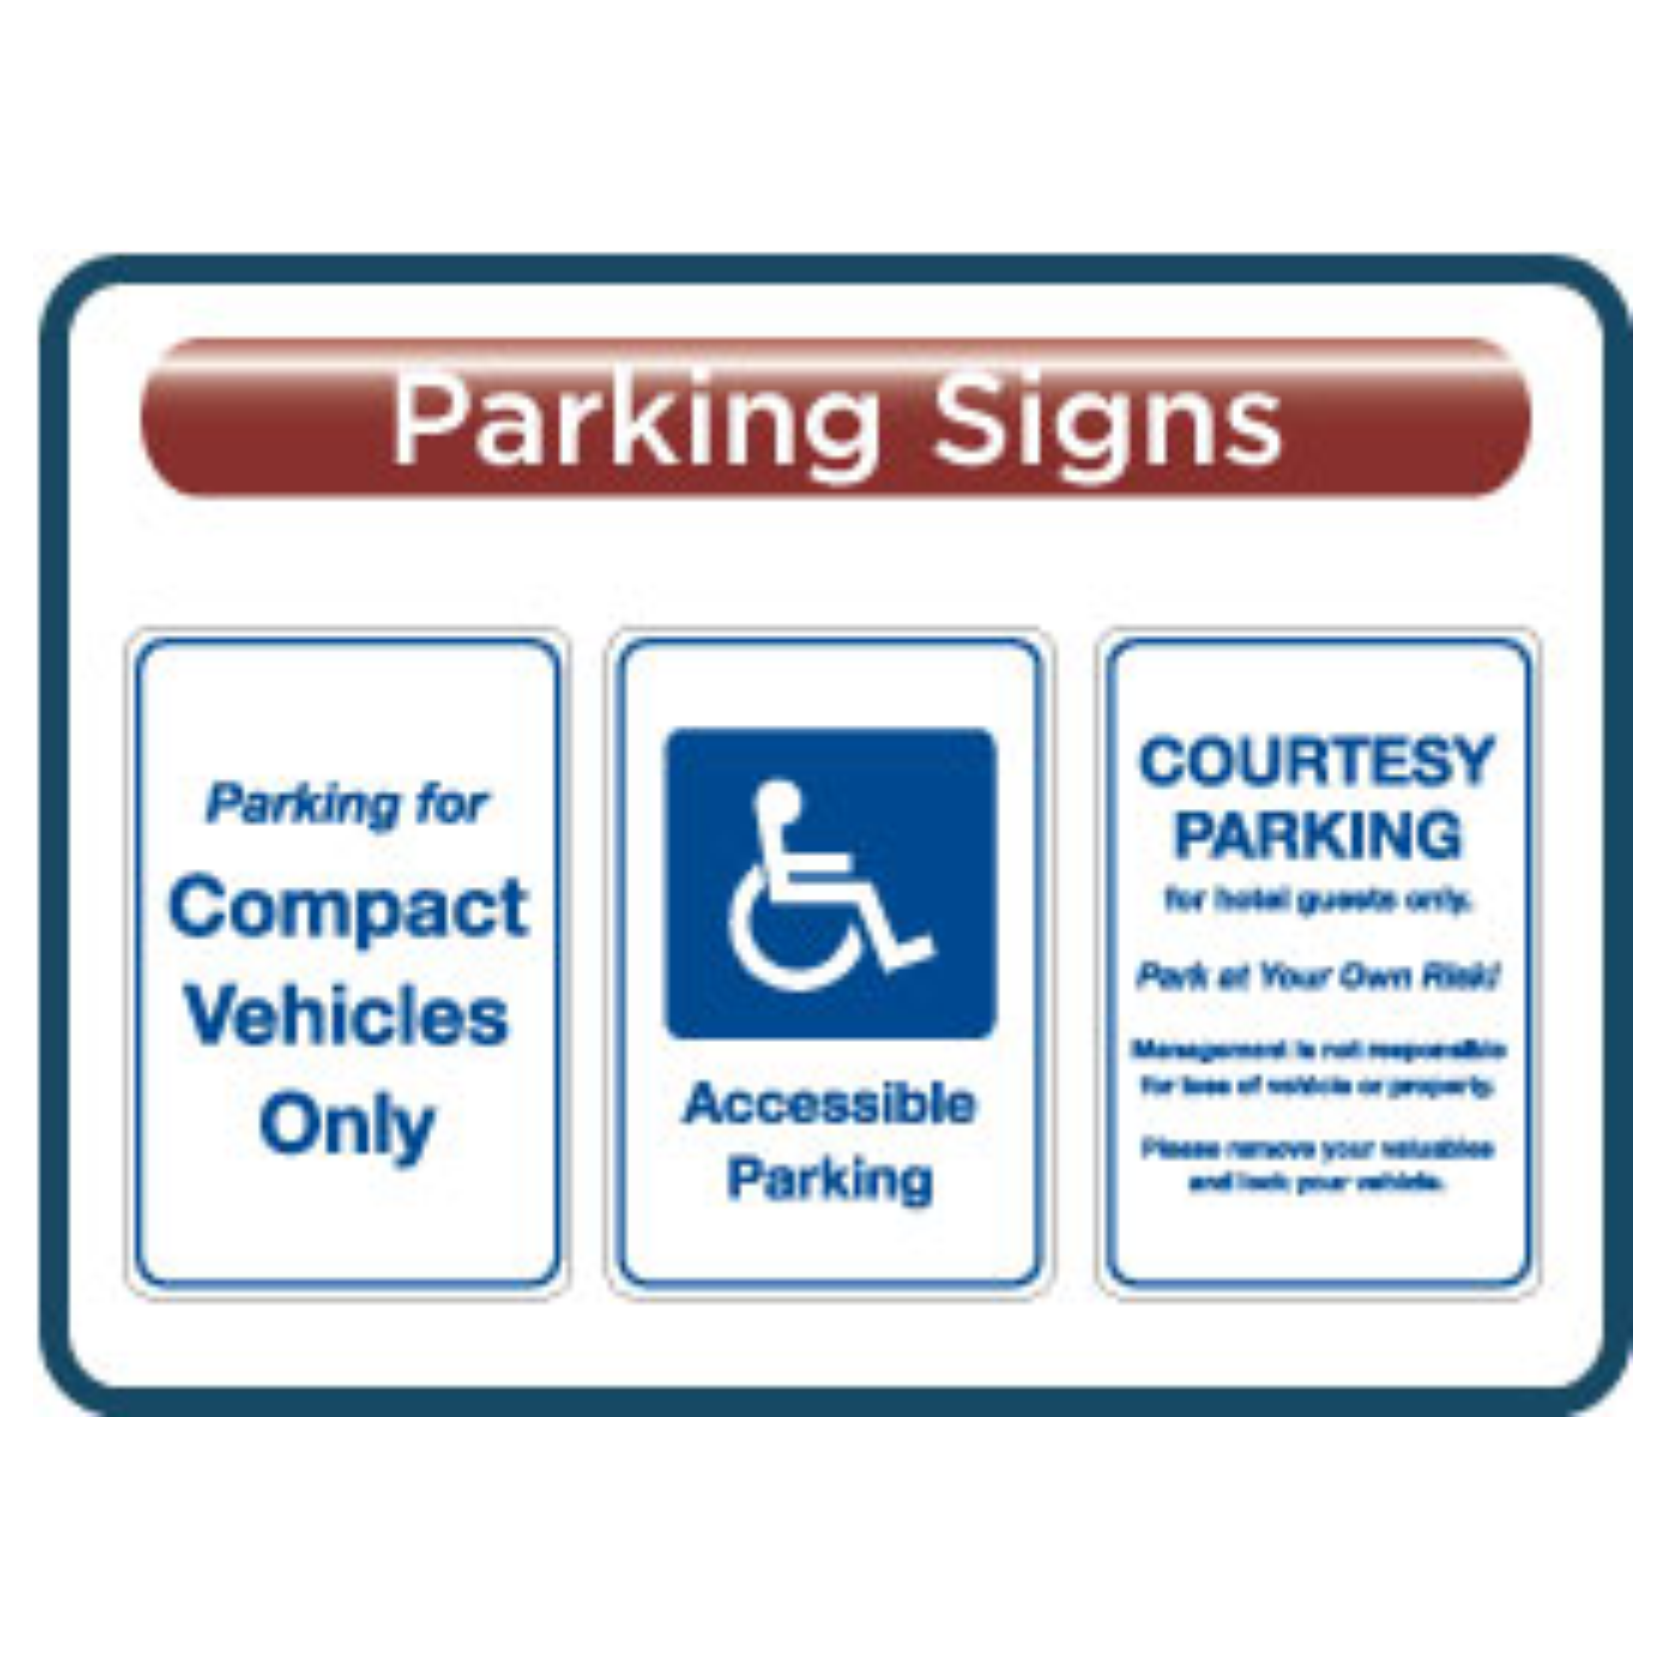 AmericInn - Parking Signs